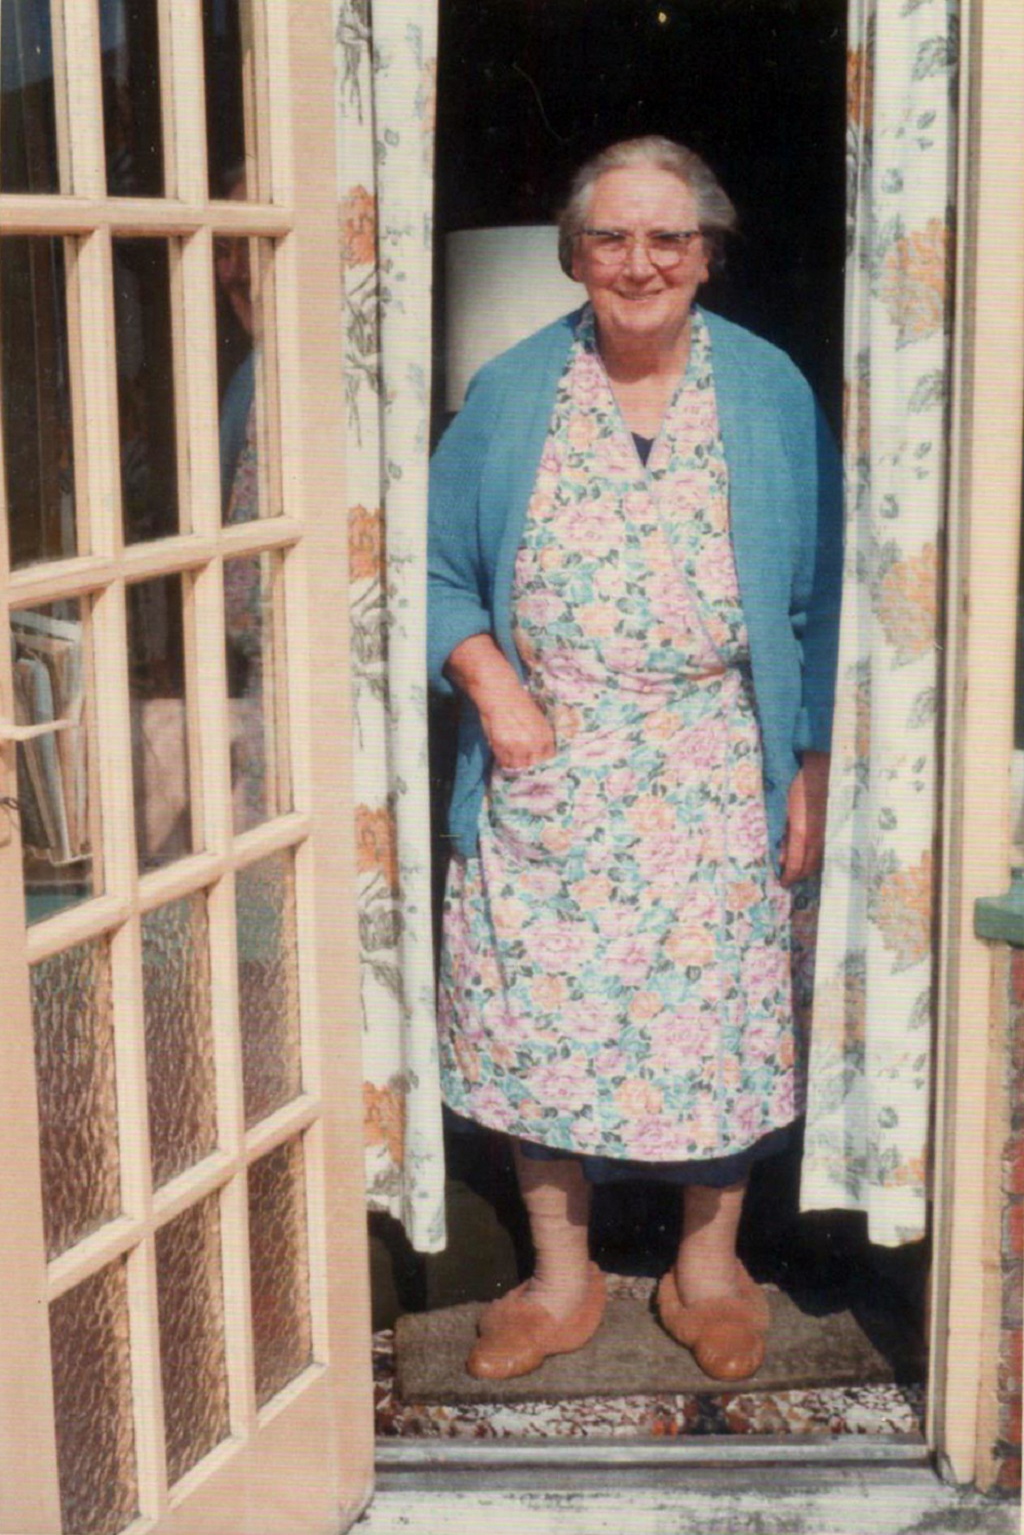 Linda Travis's grandmother, Granma Davis